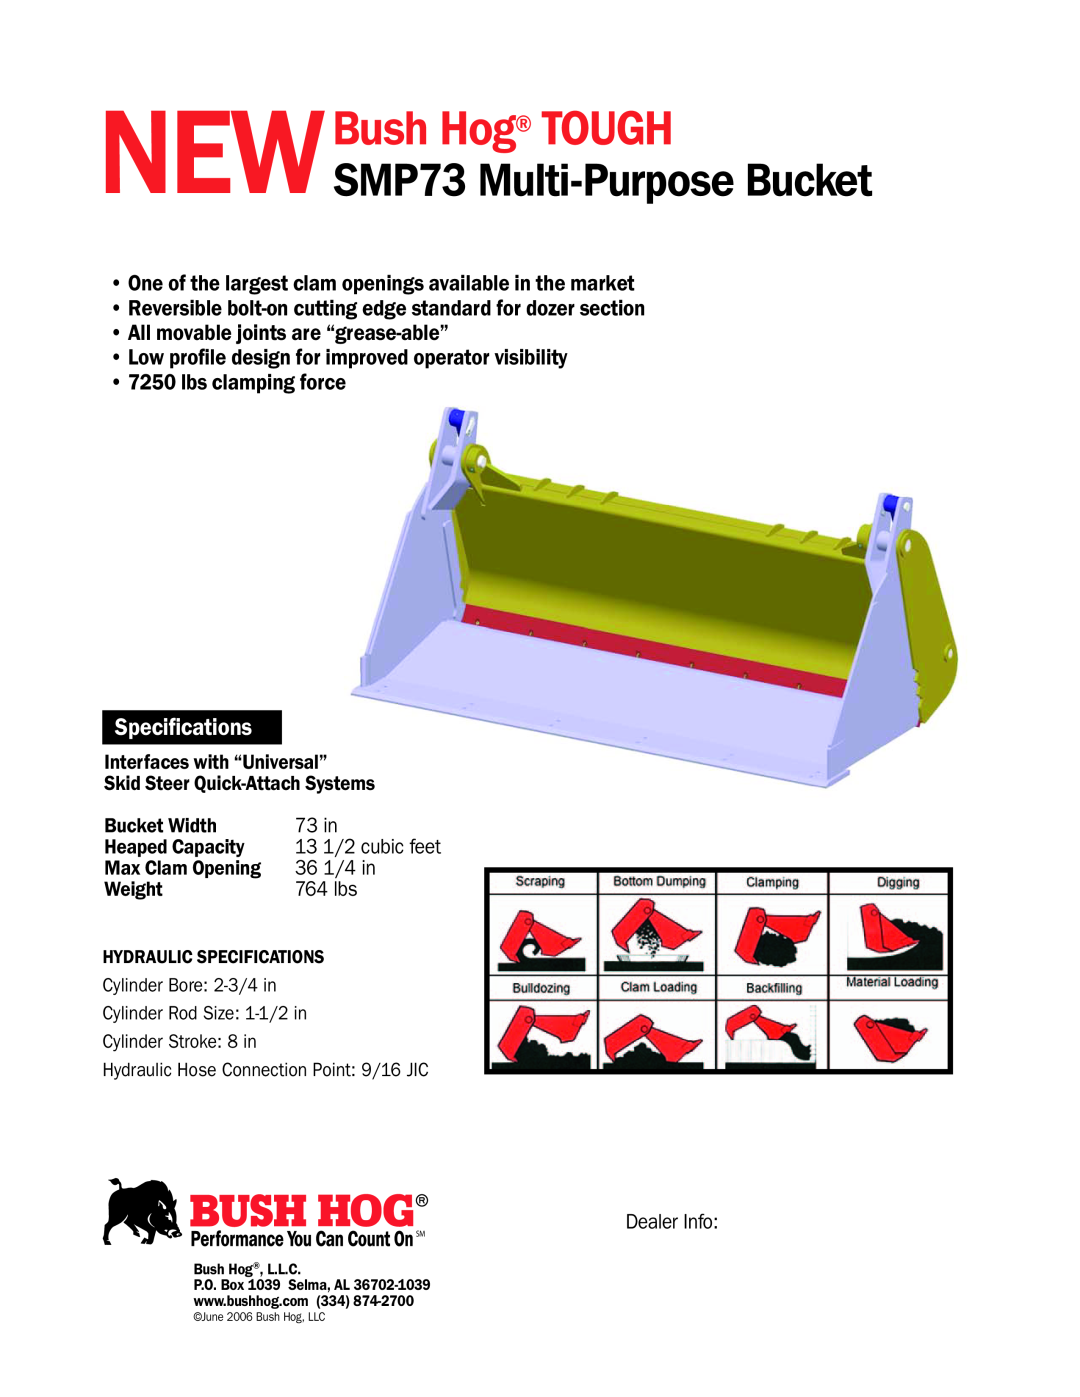 Bush Hog manual NewBush Hog TOUGH, SMP73 Multi-PurposeBucket, Spe Specifications 